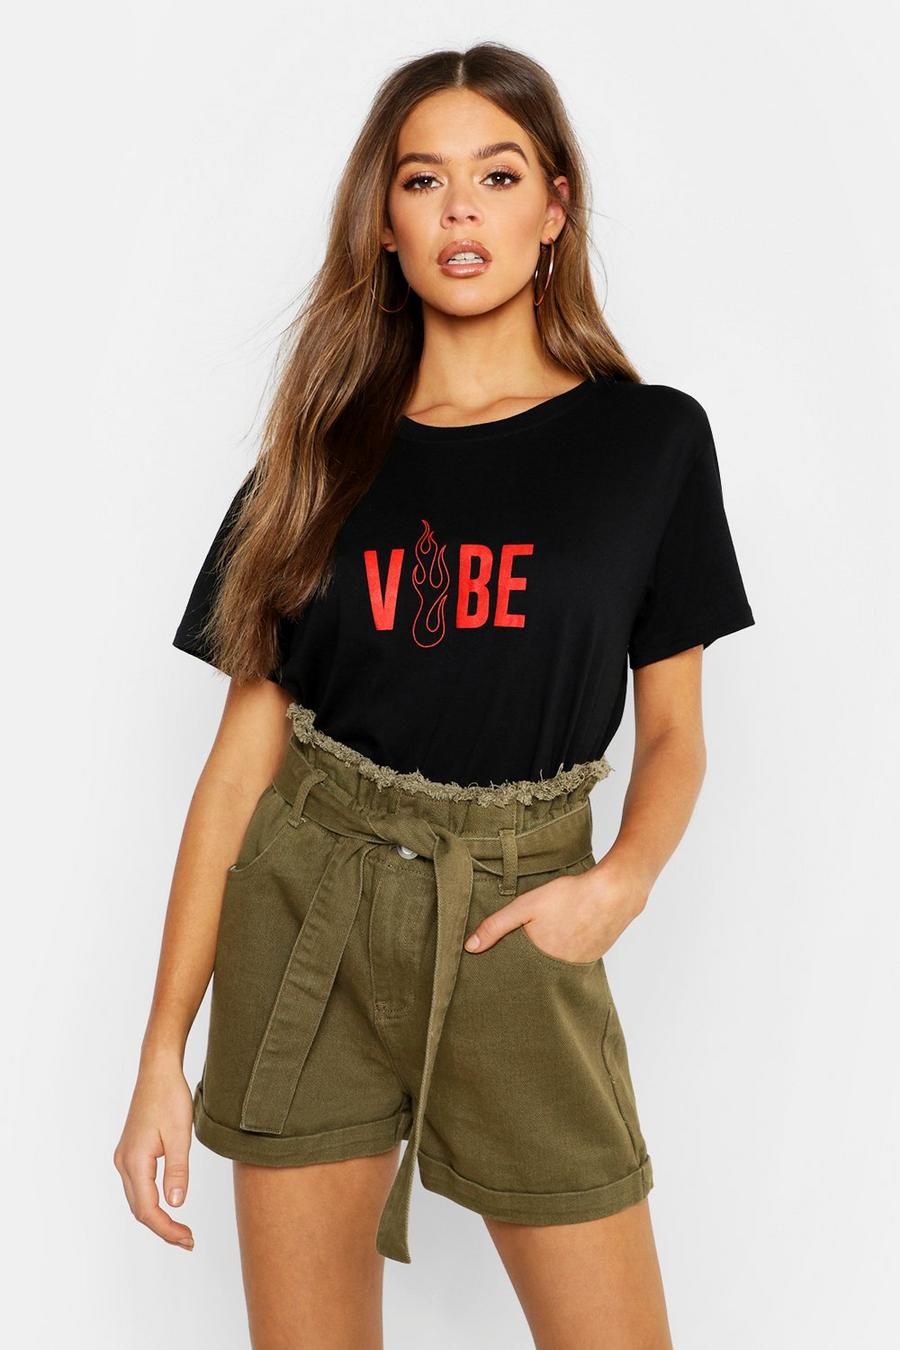 Camiseta extragrande con eslogan “Vibes” image number 1